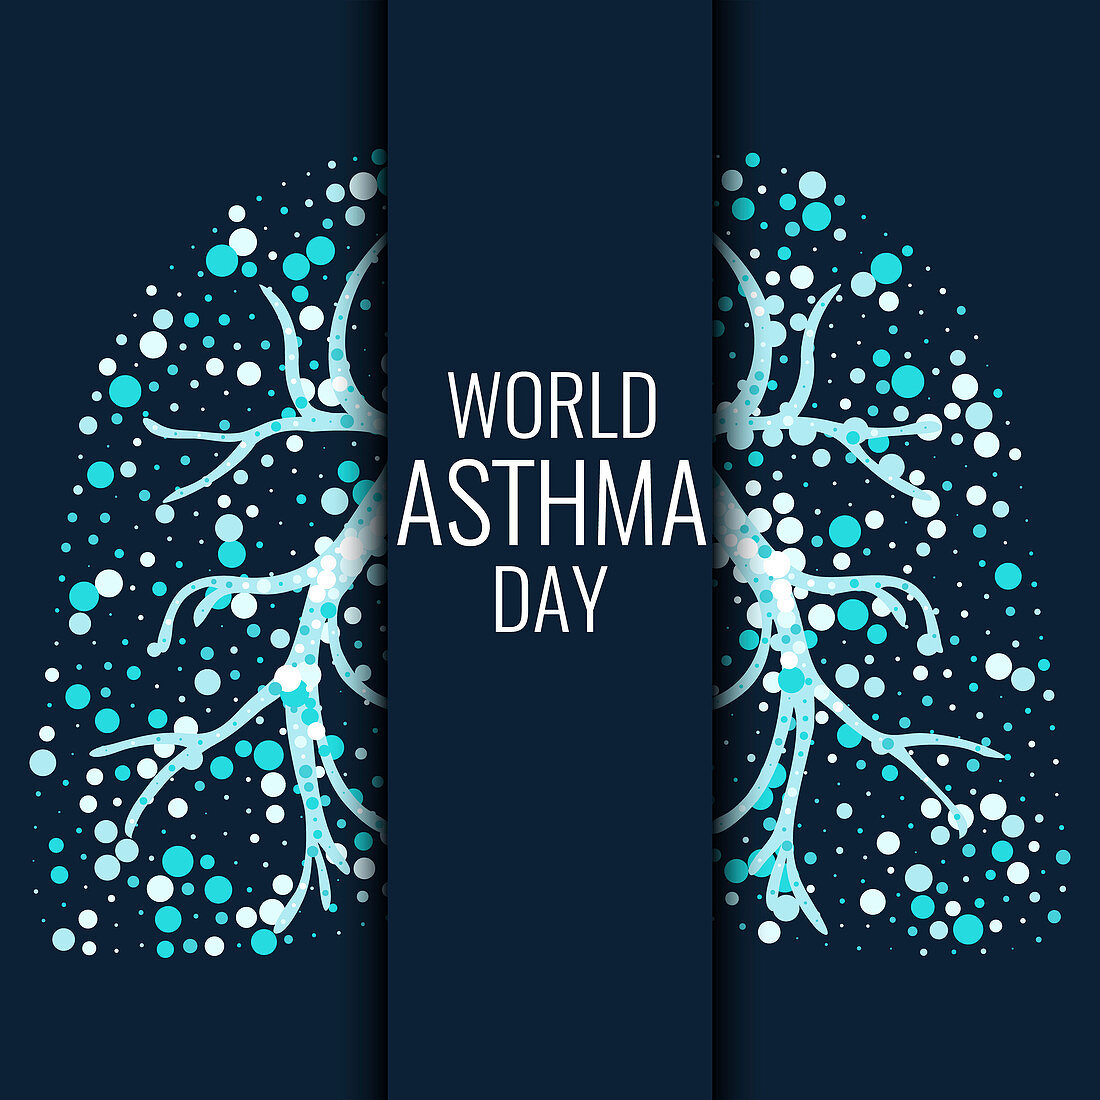 World asthma day, illustration